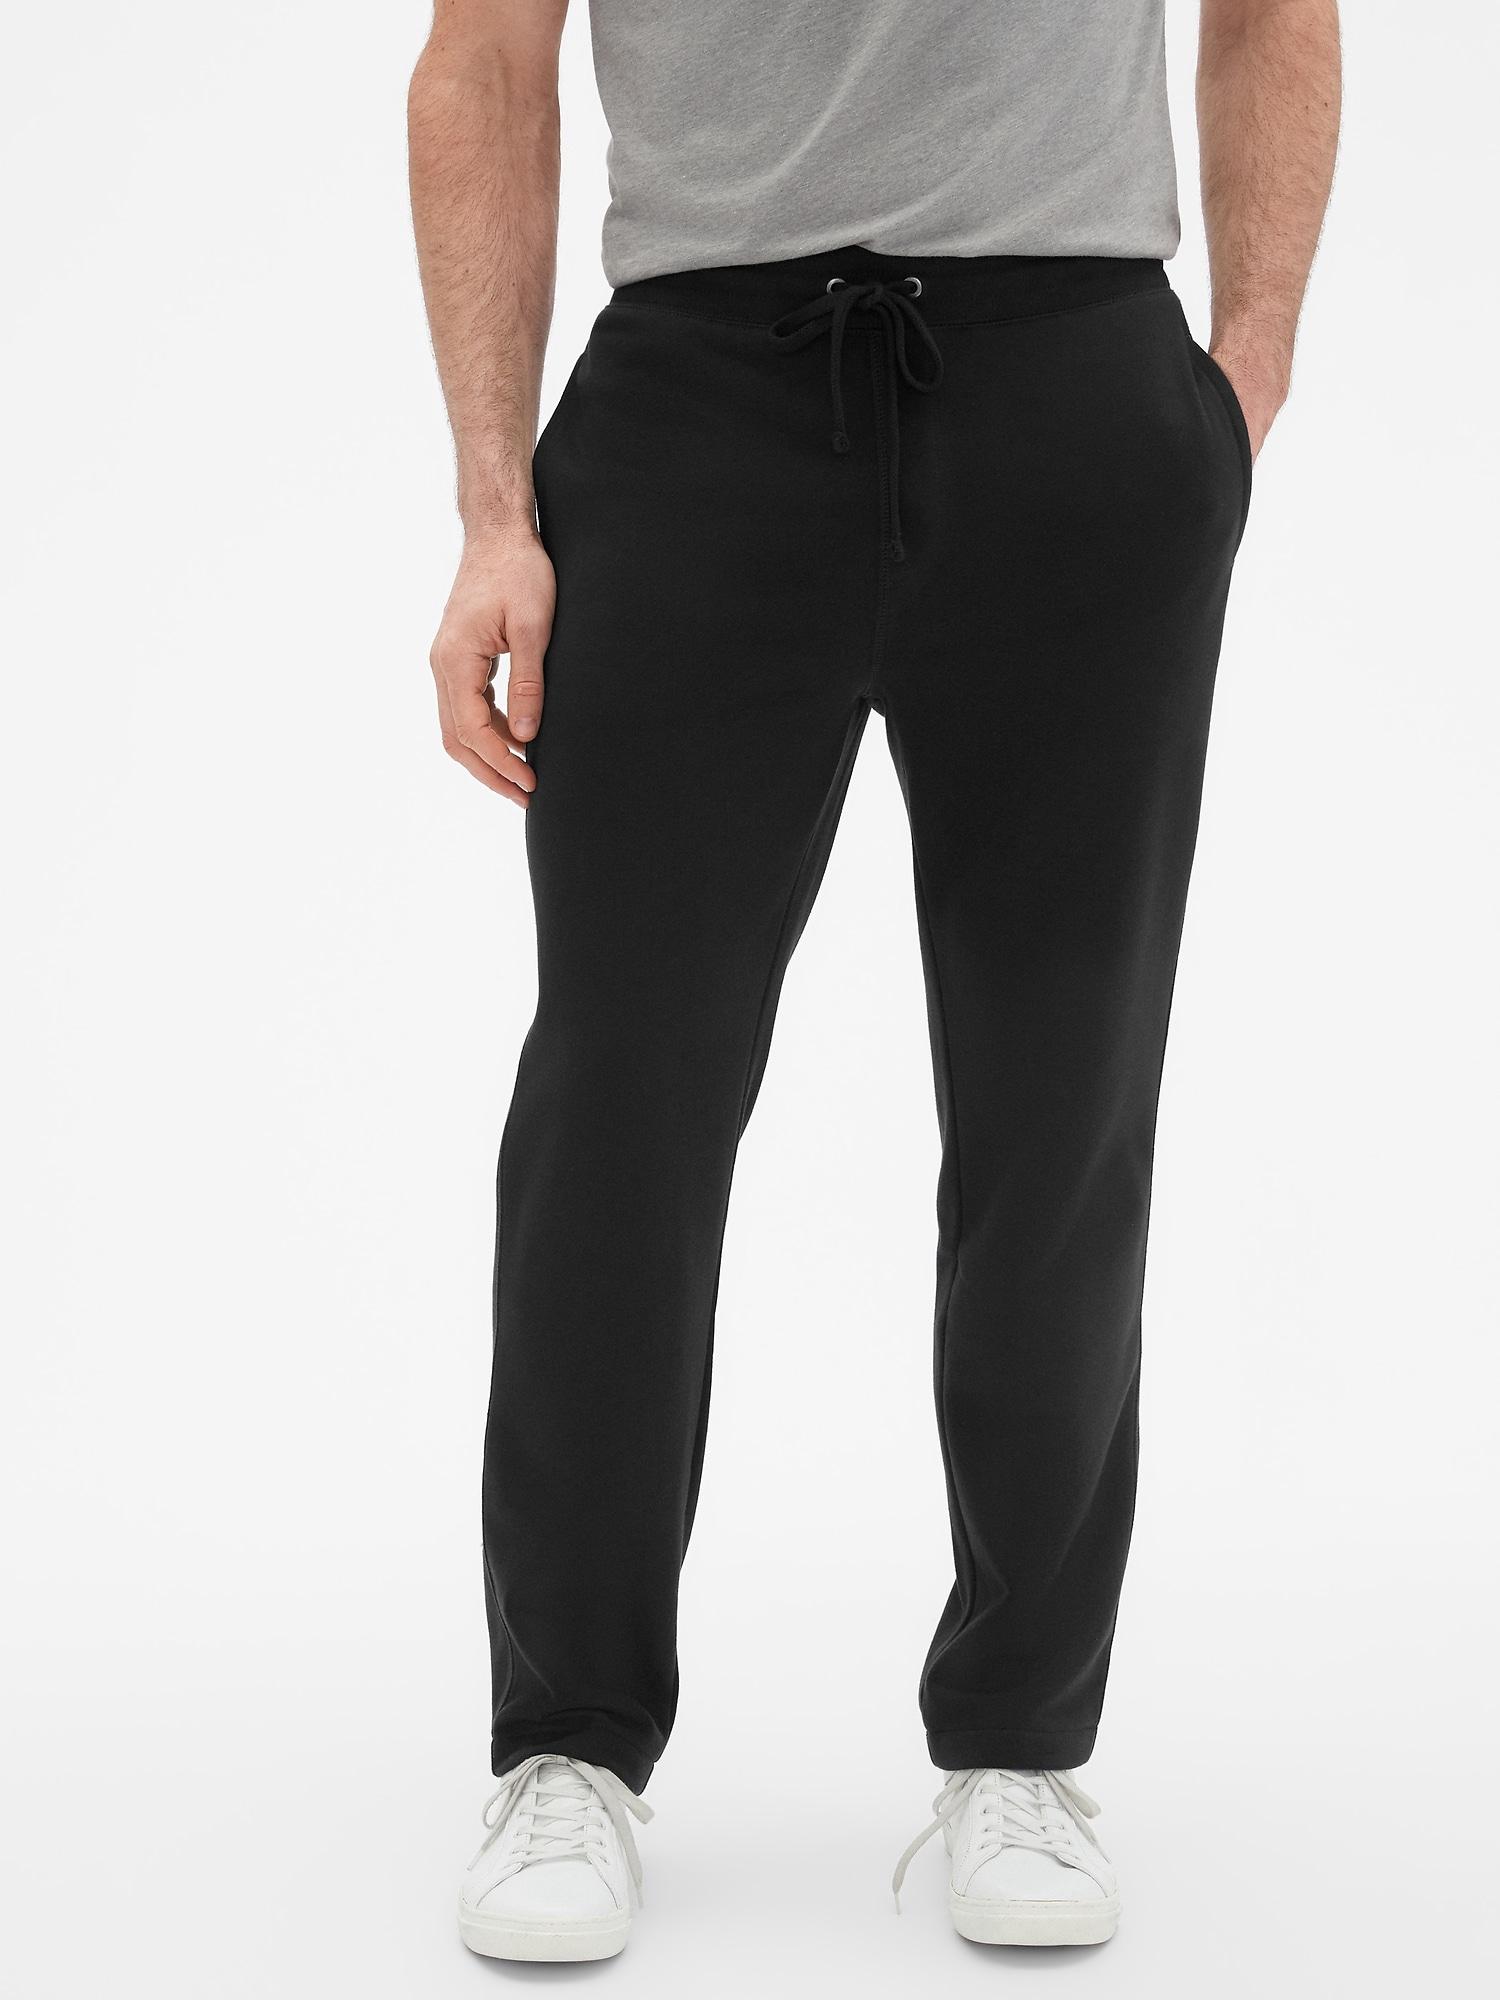 GAP Factory Fleece Sweatpants in Black for Men - Save 18% - Lyst